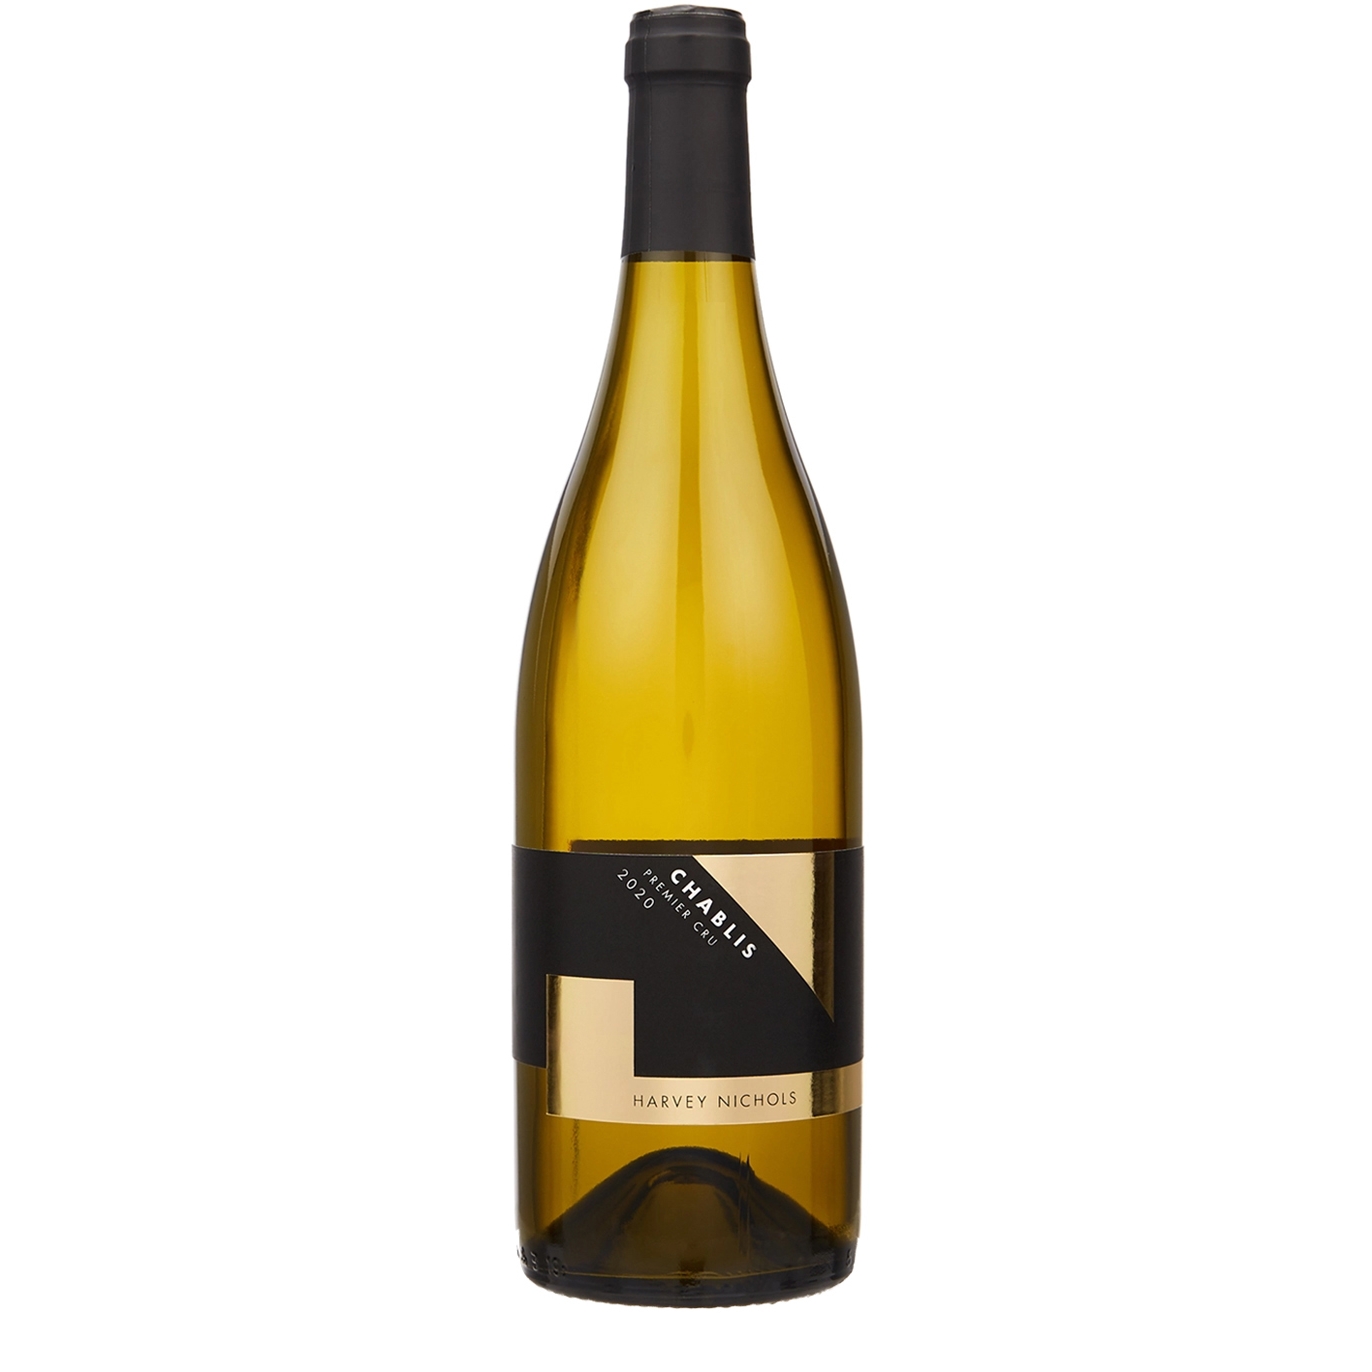 Harvey Nichols Premium Chablis Premier Cru 2020 White Wine